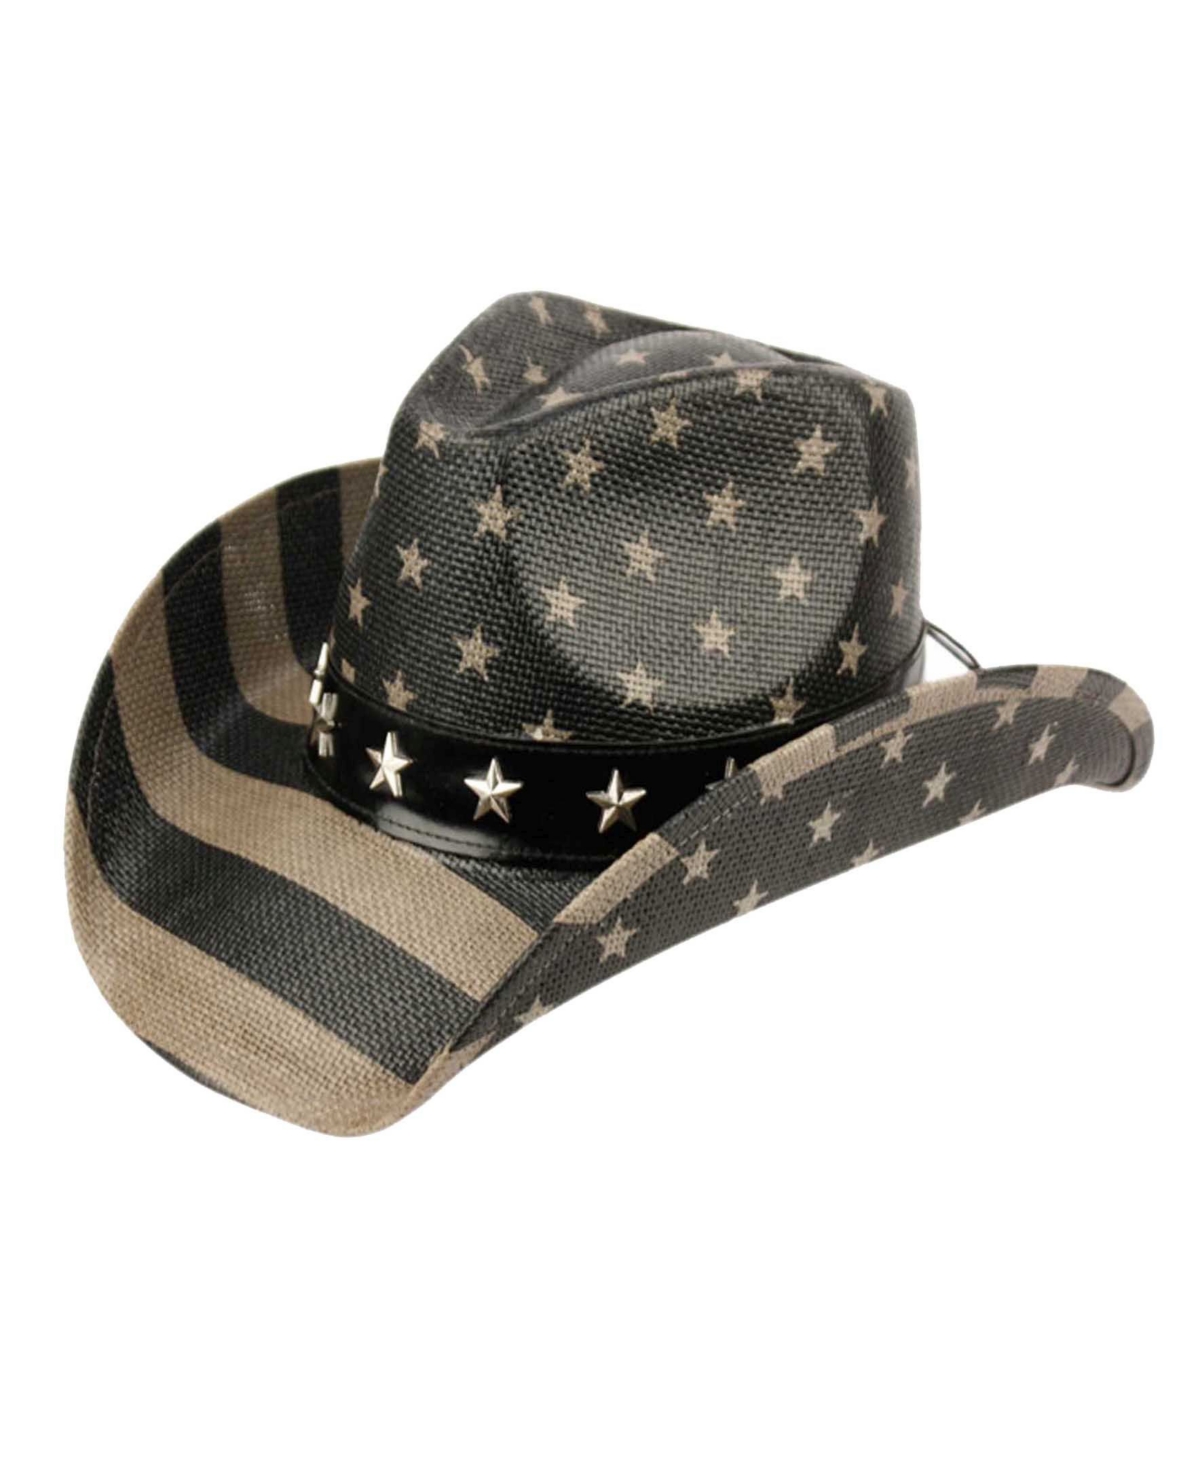 Angela & William Black American Flag Cowboy Hat with Star Studs - Black